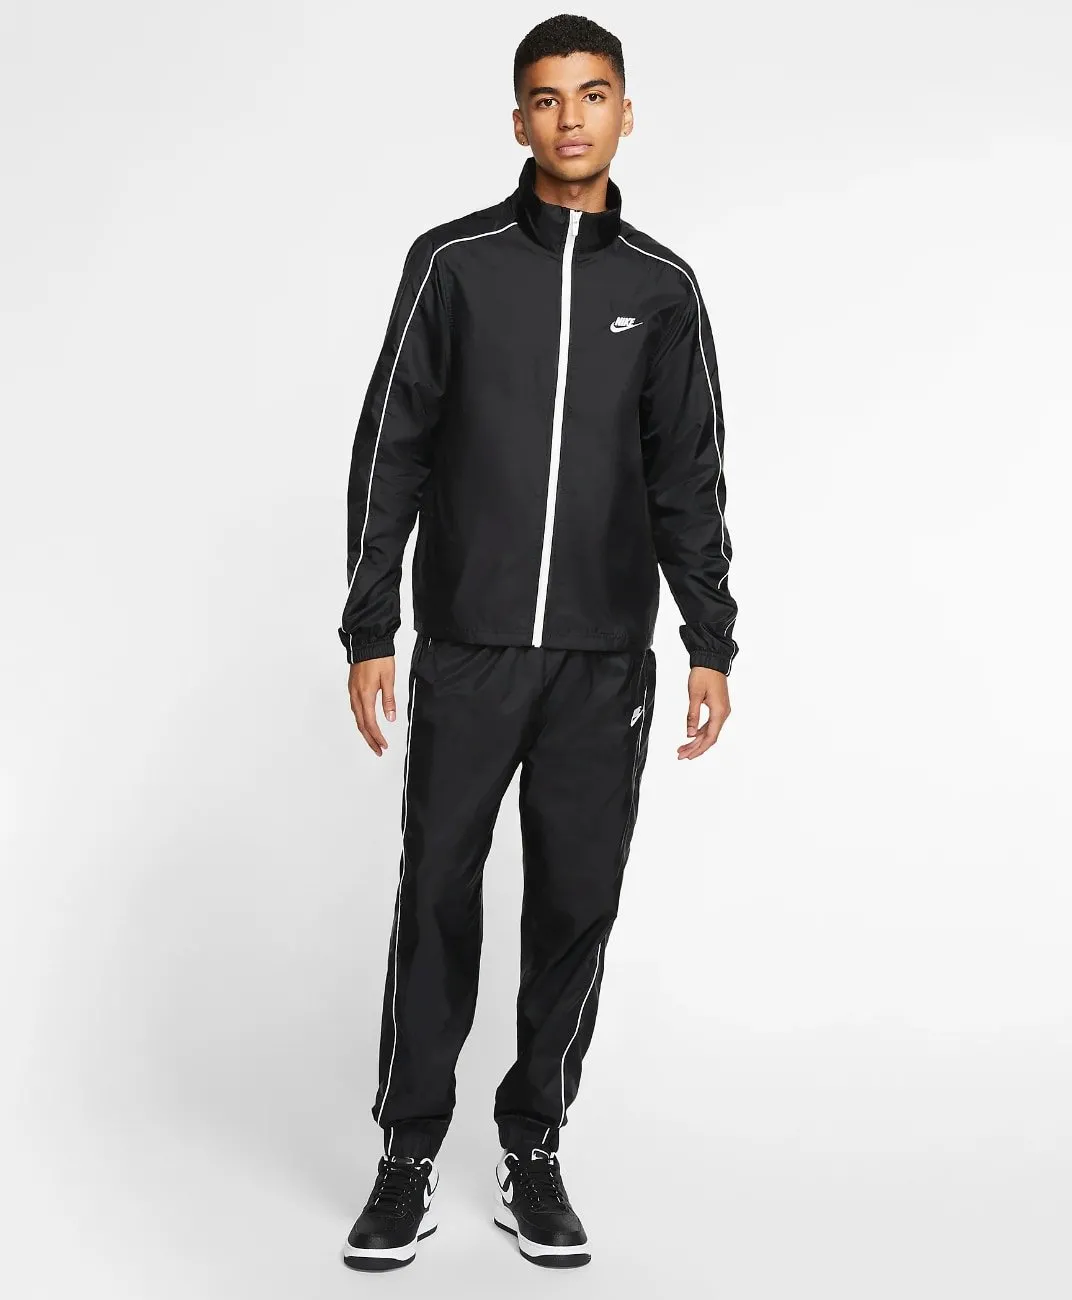 Спортивный костюм Nike Sportswear BV3030-010 - купить в интернет-магазине Спортстайлер